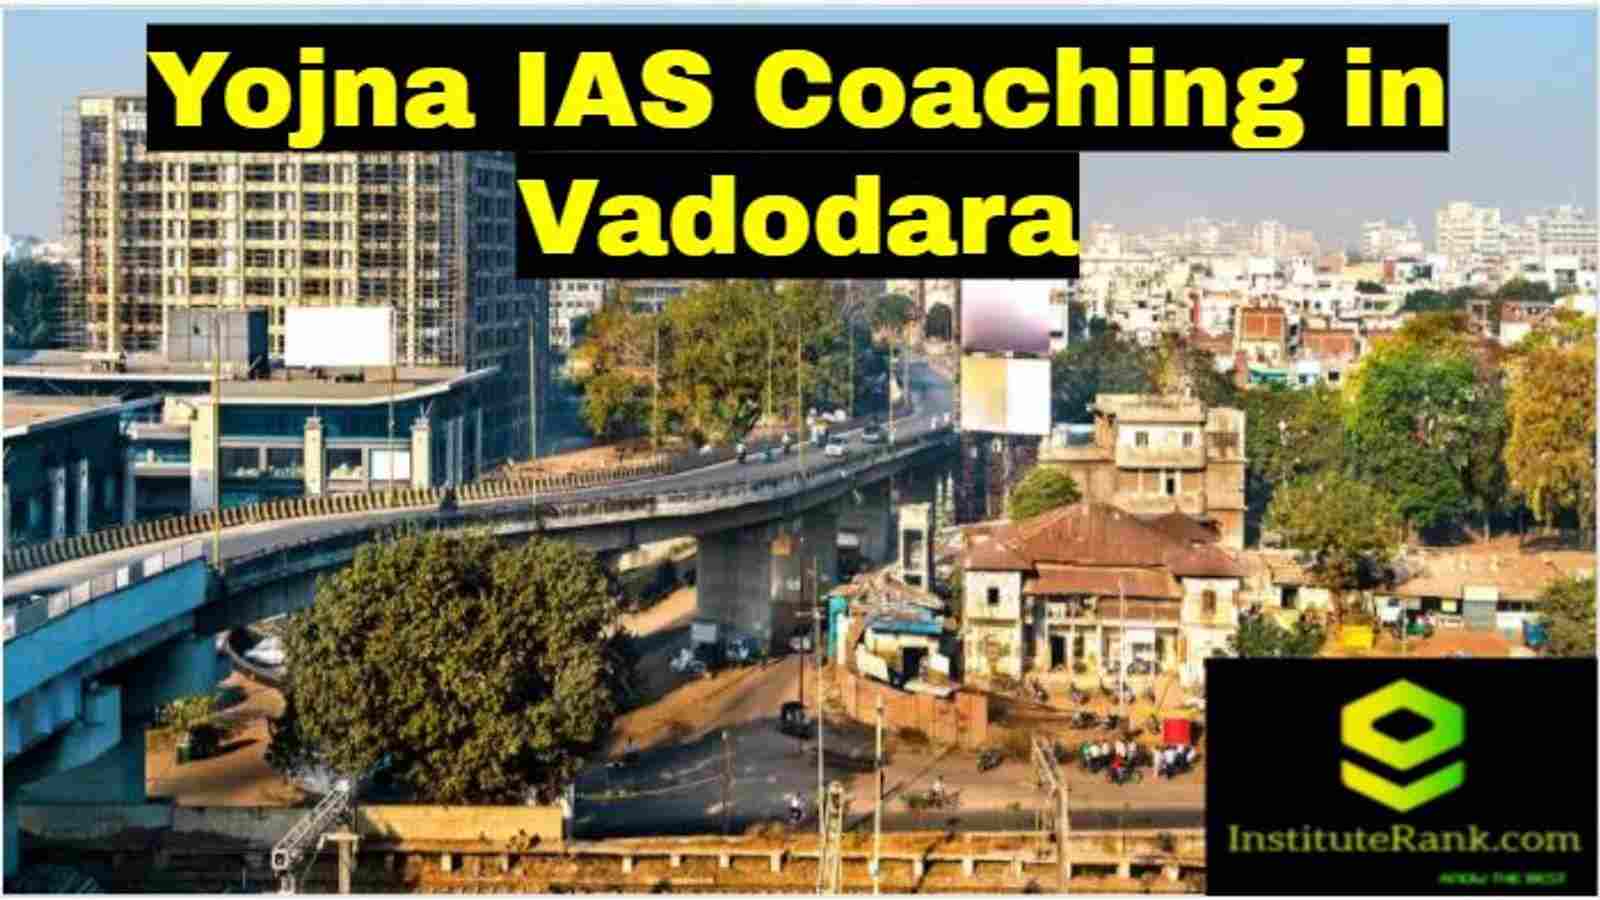 Yojna IAS Coaching in Vadodara